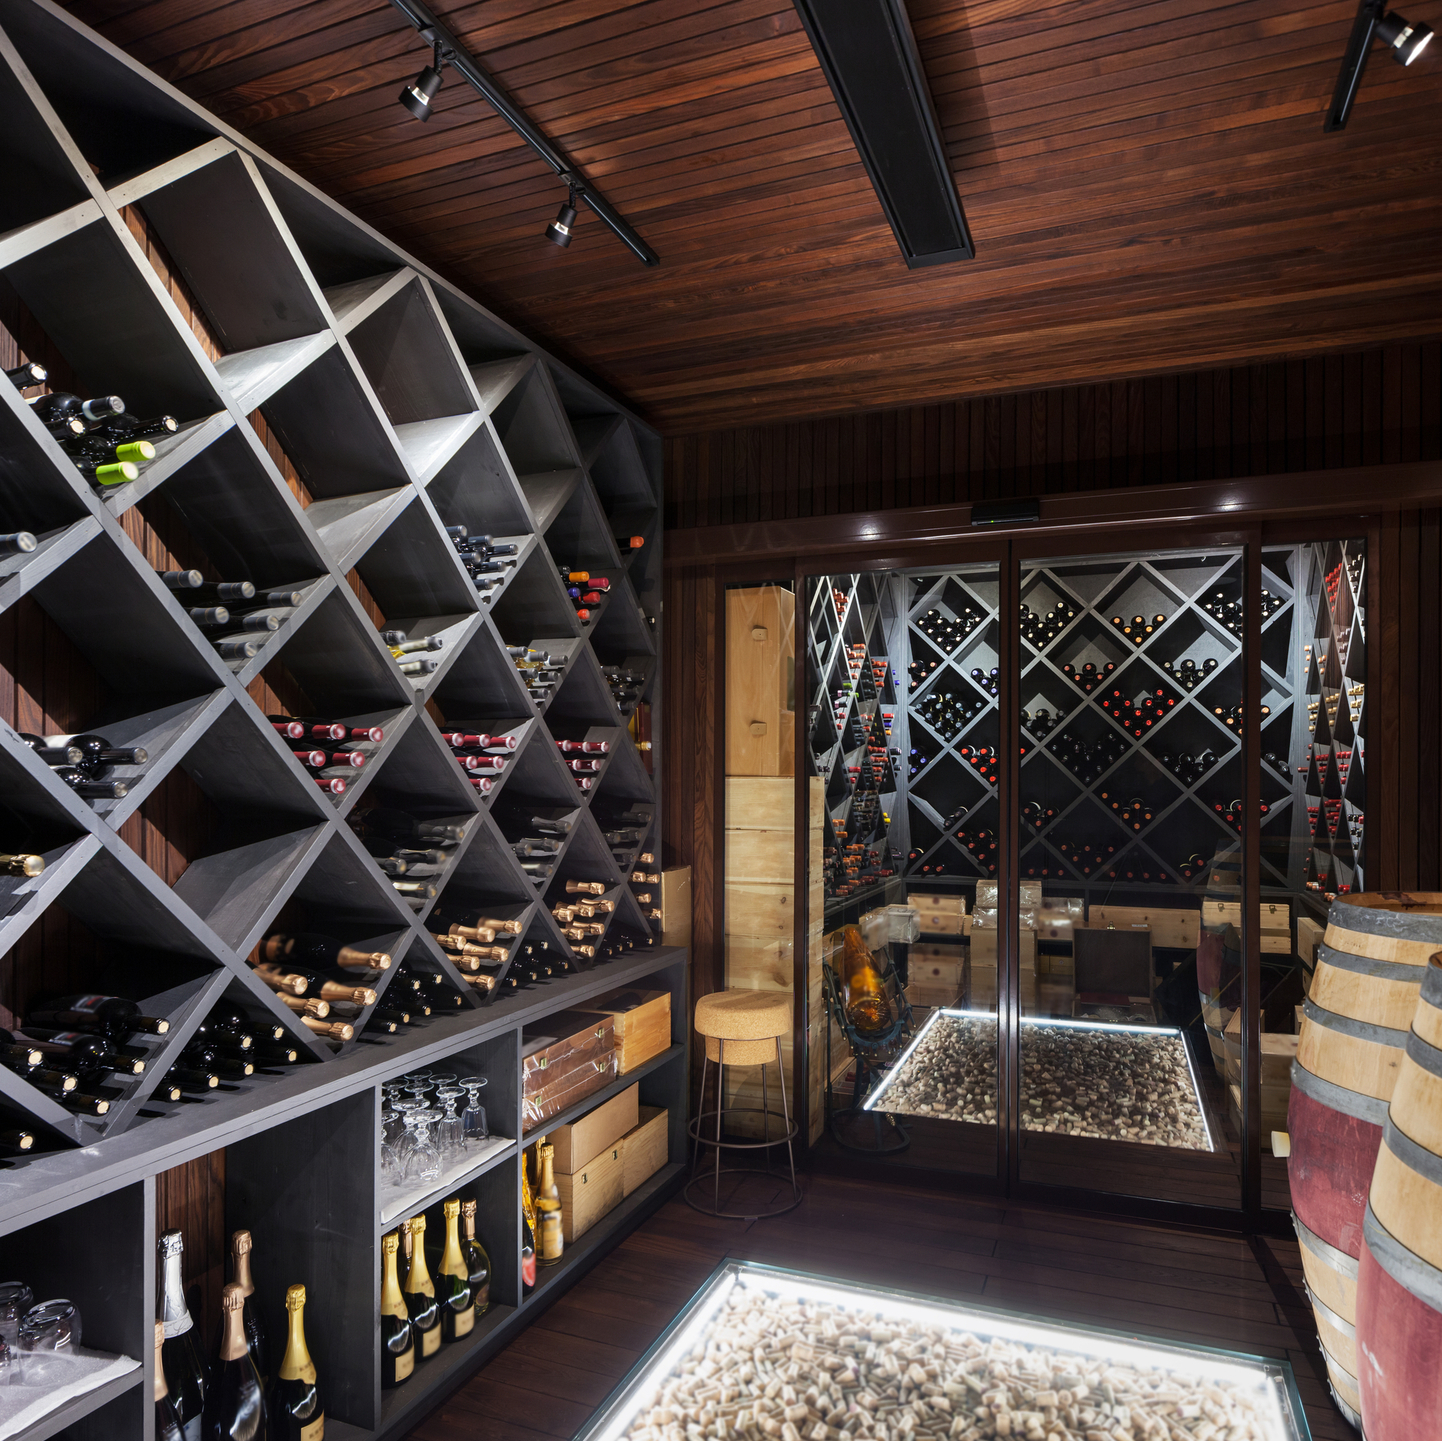 Home wine cellar in basement conversion